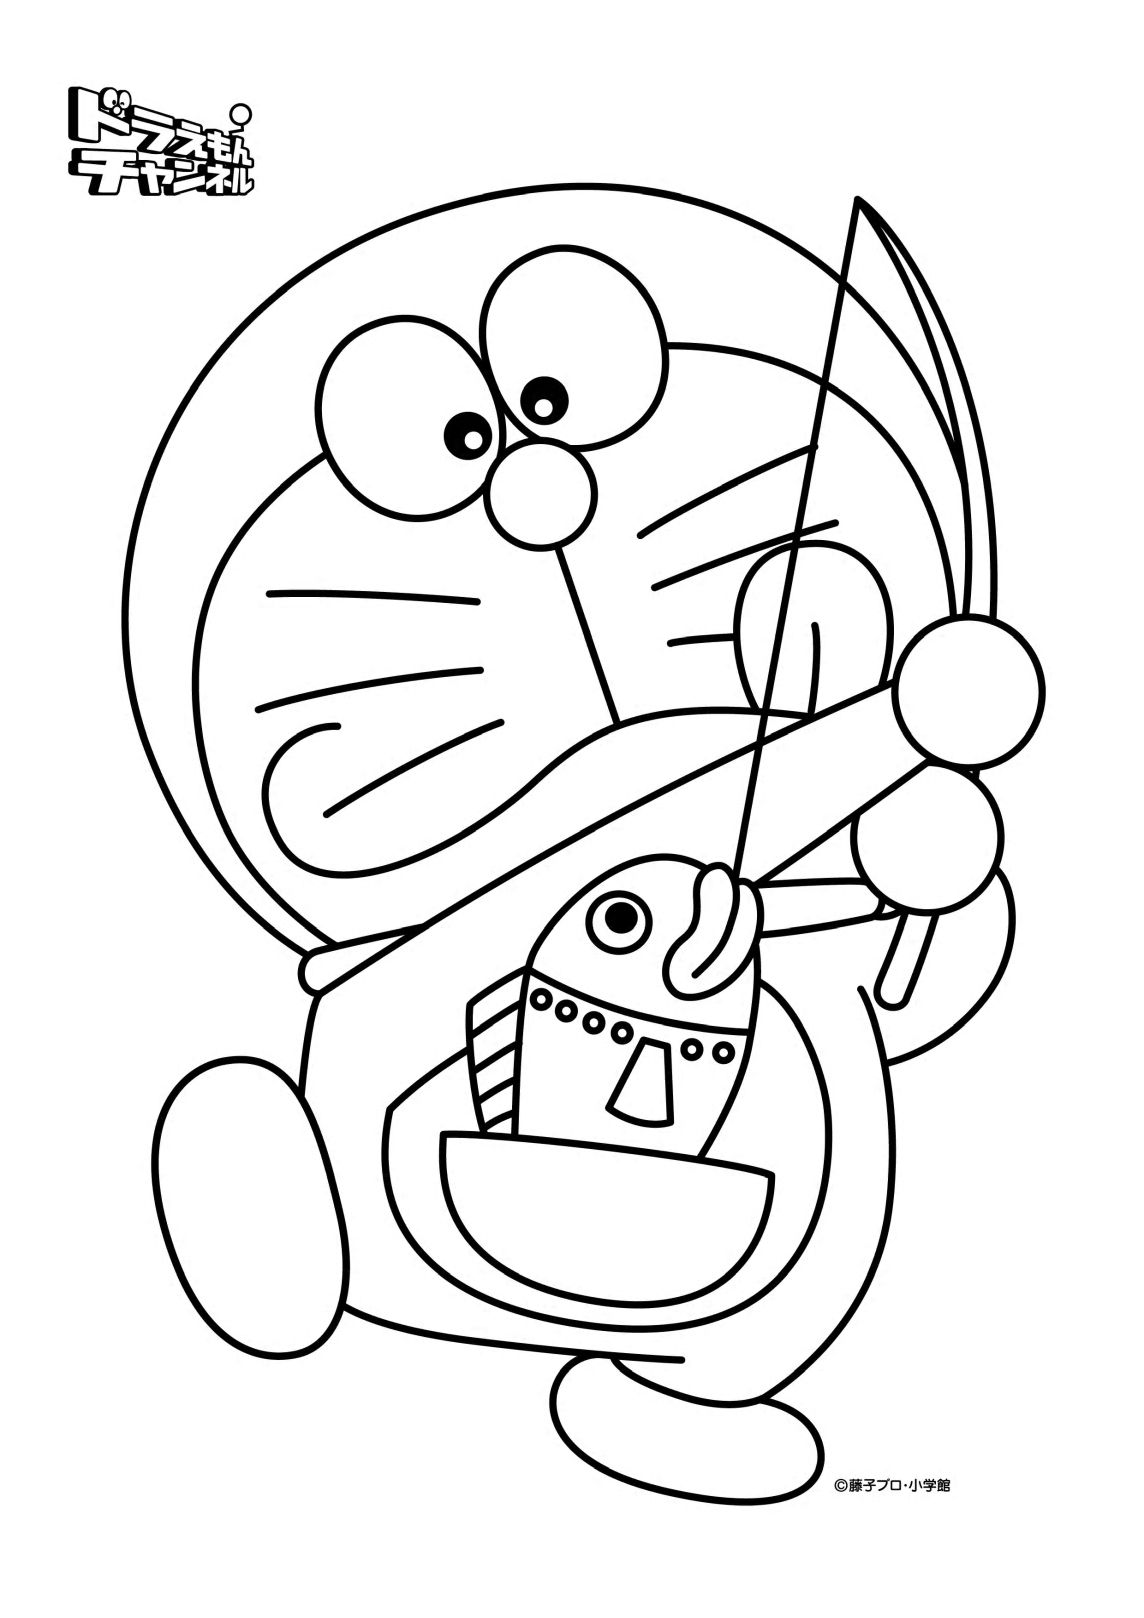 Doraemix (Doraemon Fan Character/OC) by ElijahDMGZ on DeviantArt